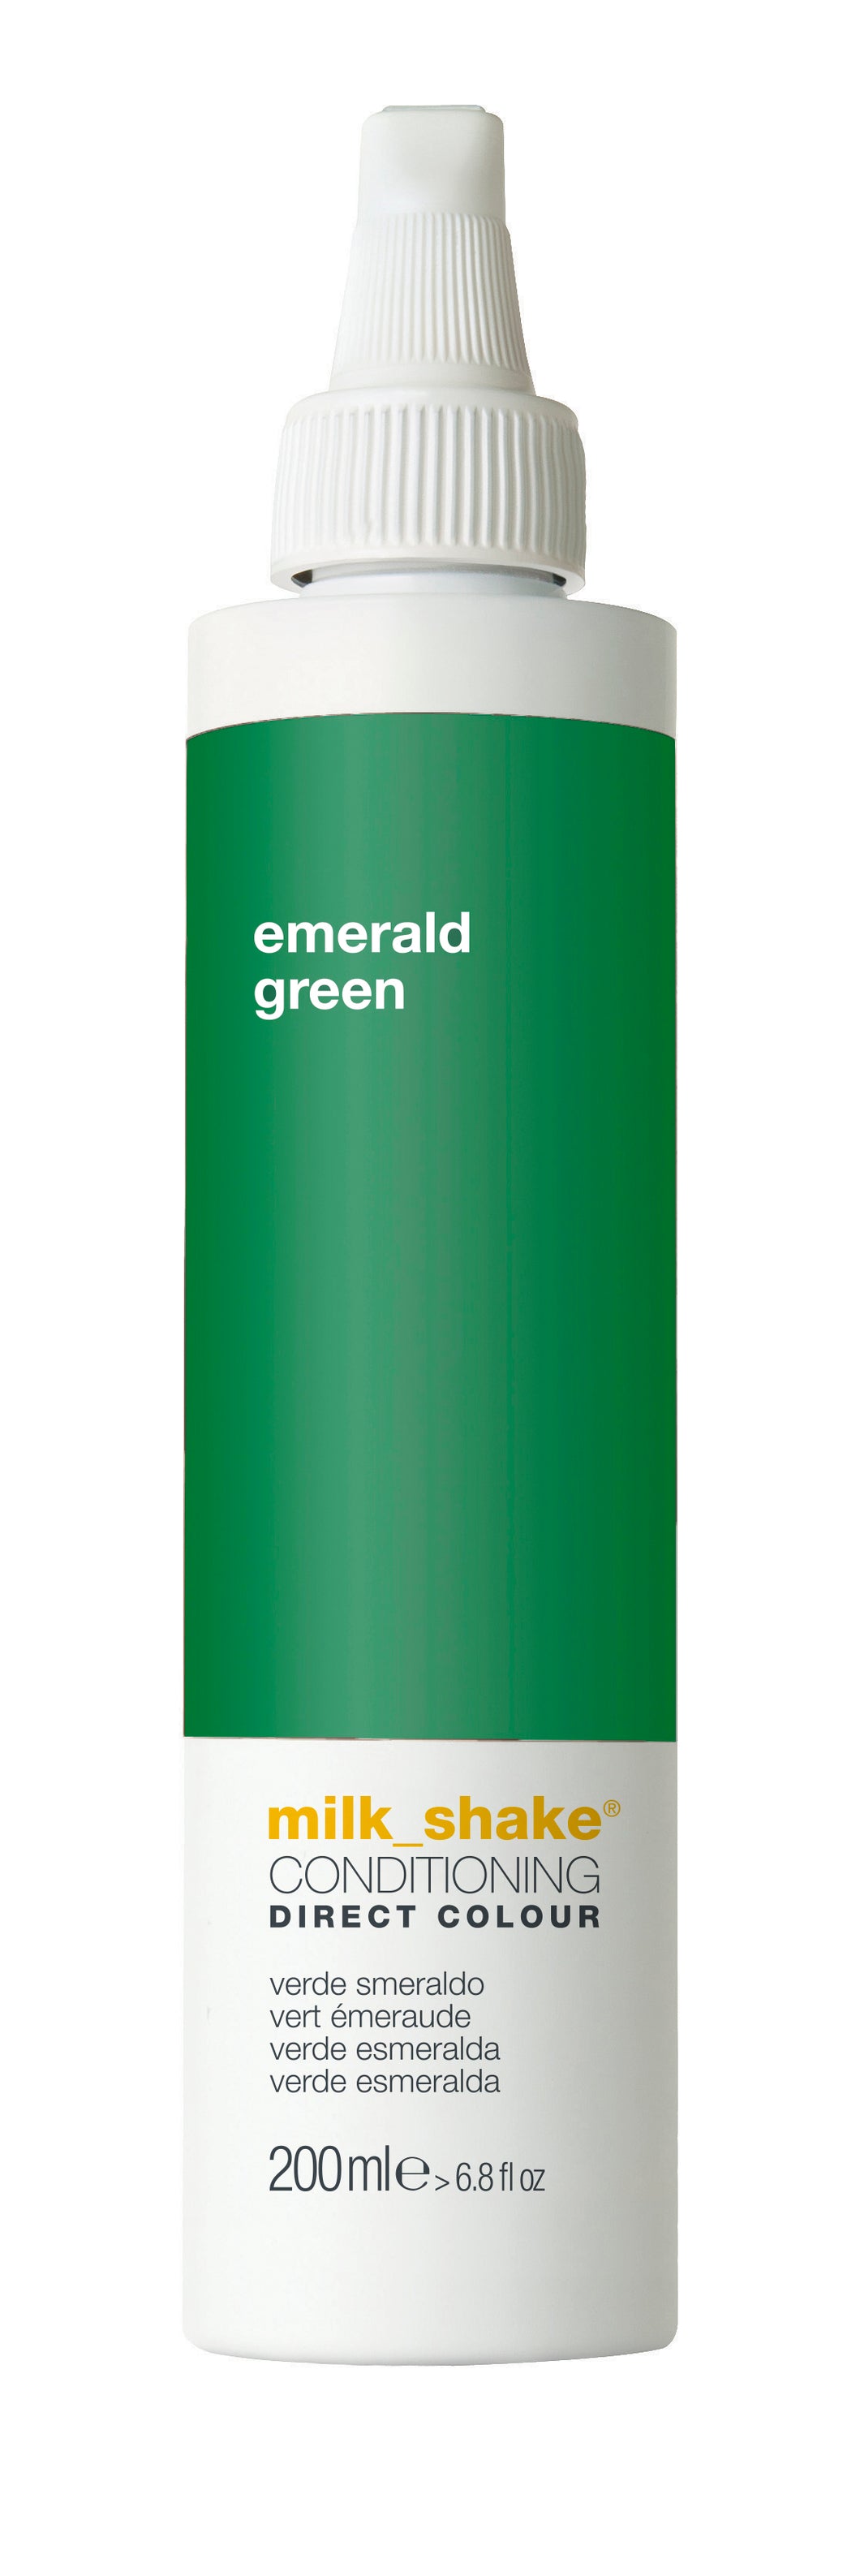 milk_shake direct colour emerald green